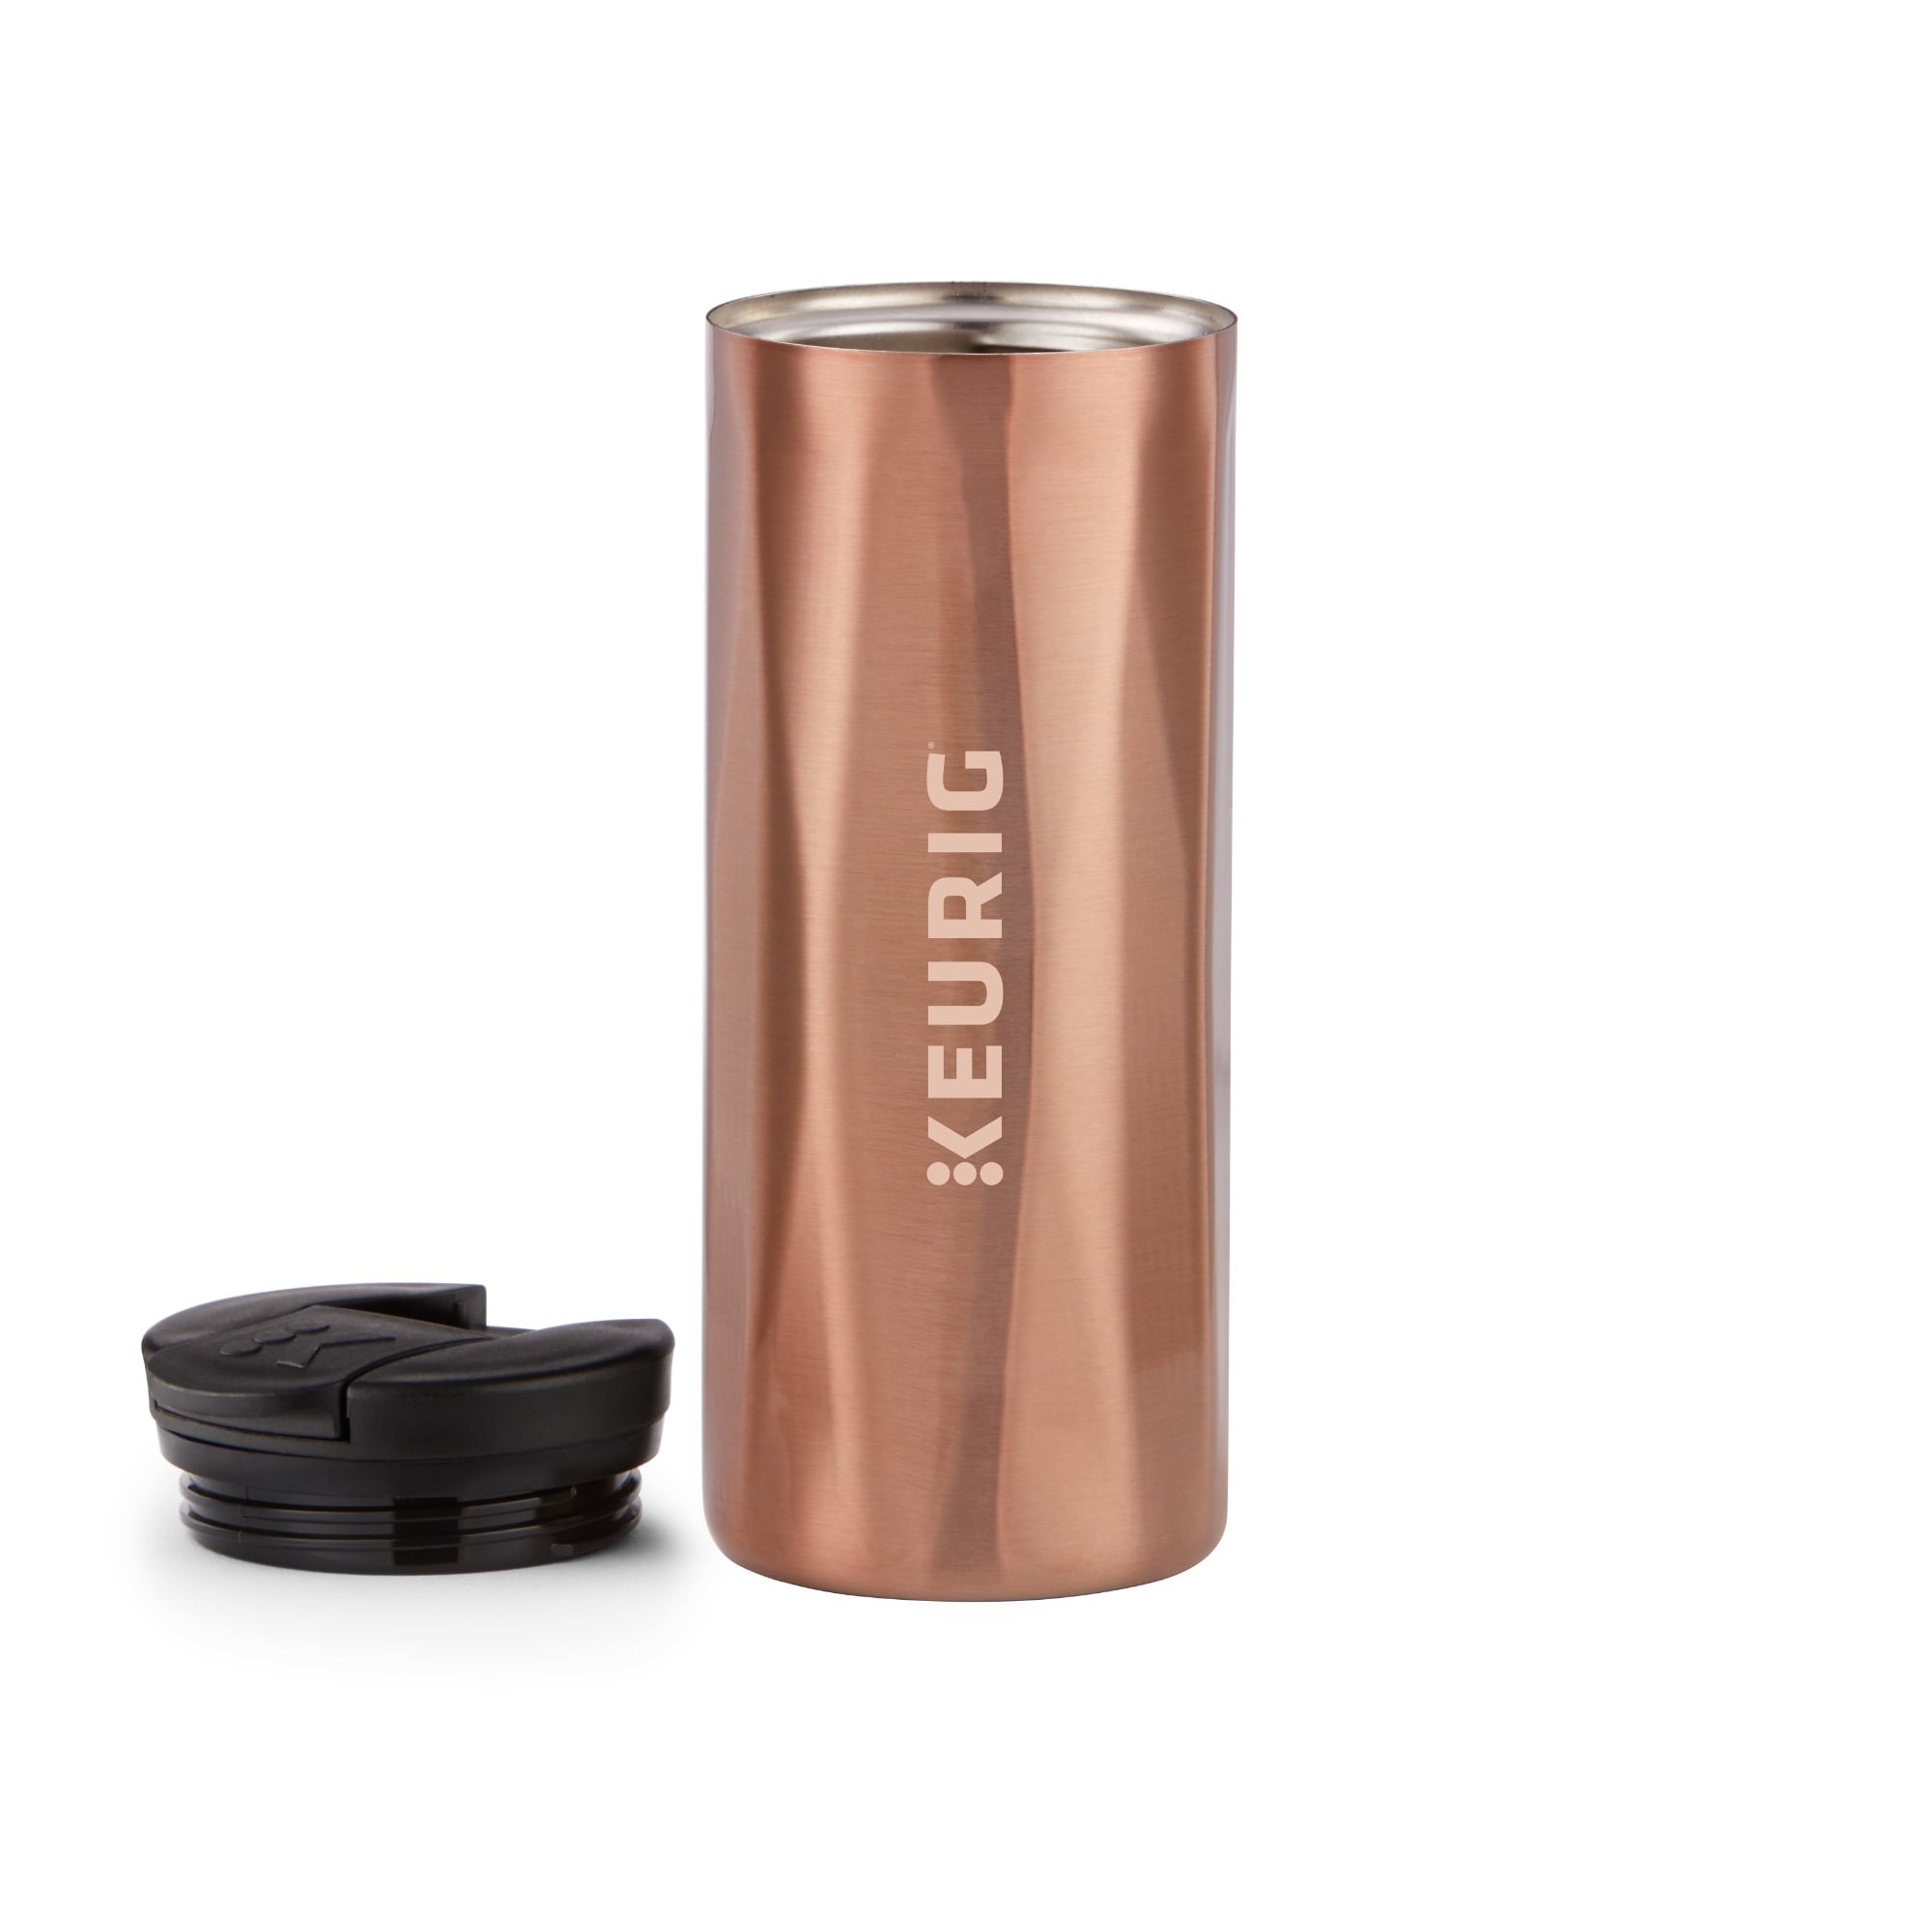  Keurig Coffee Travel Mug, Fits Under Any Keurig K-Cup Pod  Coffee Maker, 14 oz, Red: Home & Kitchen